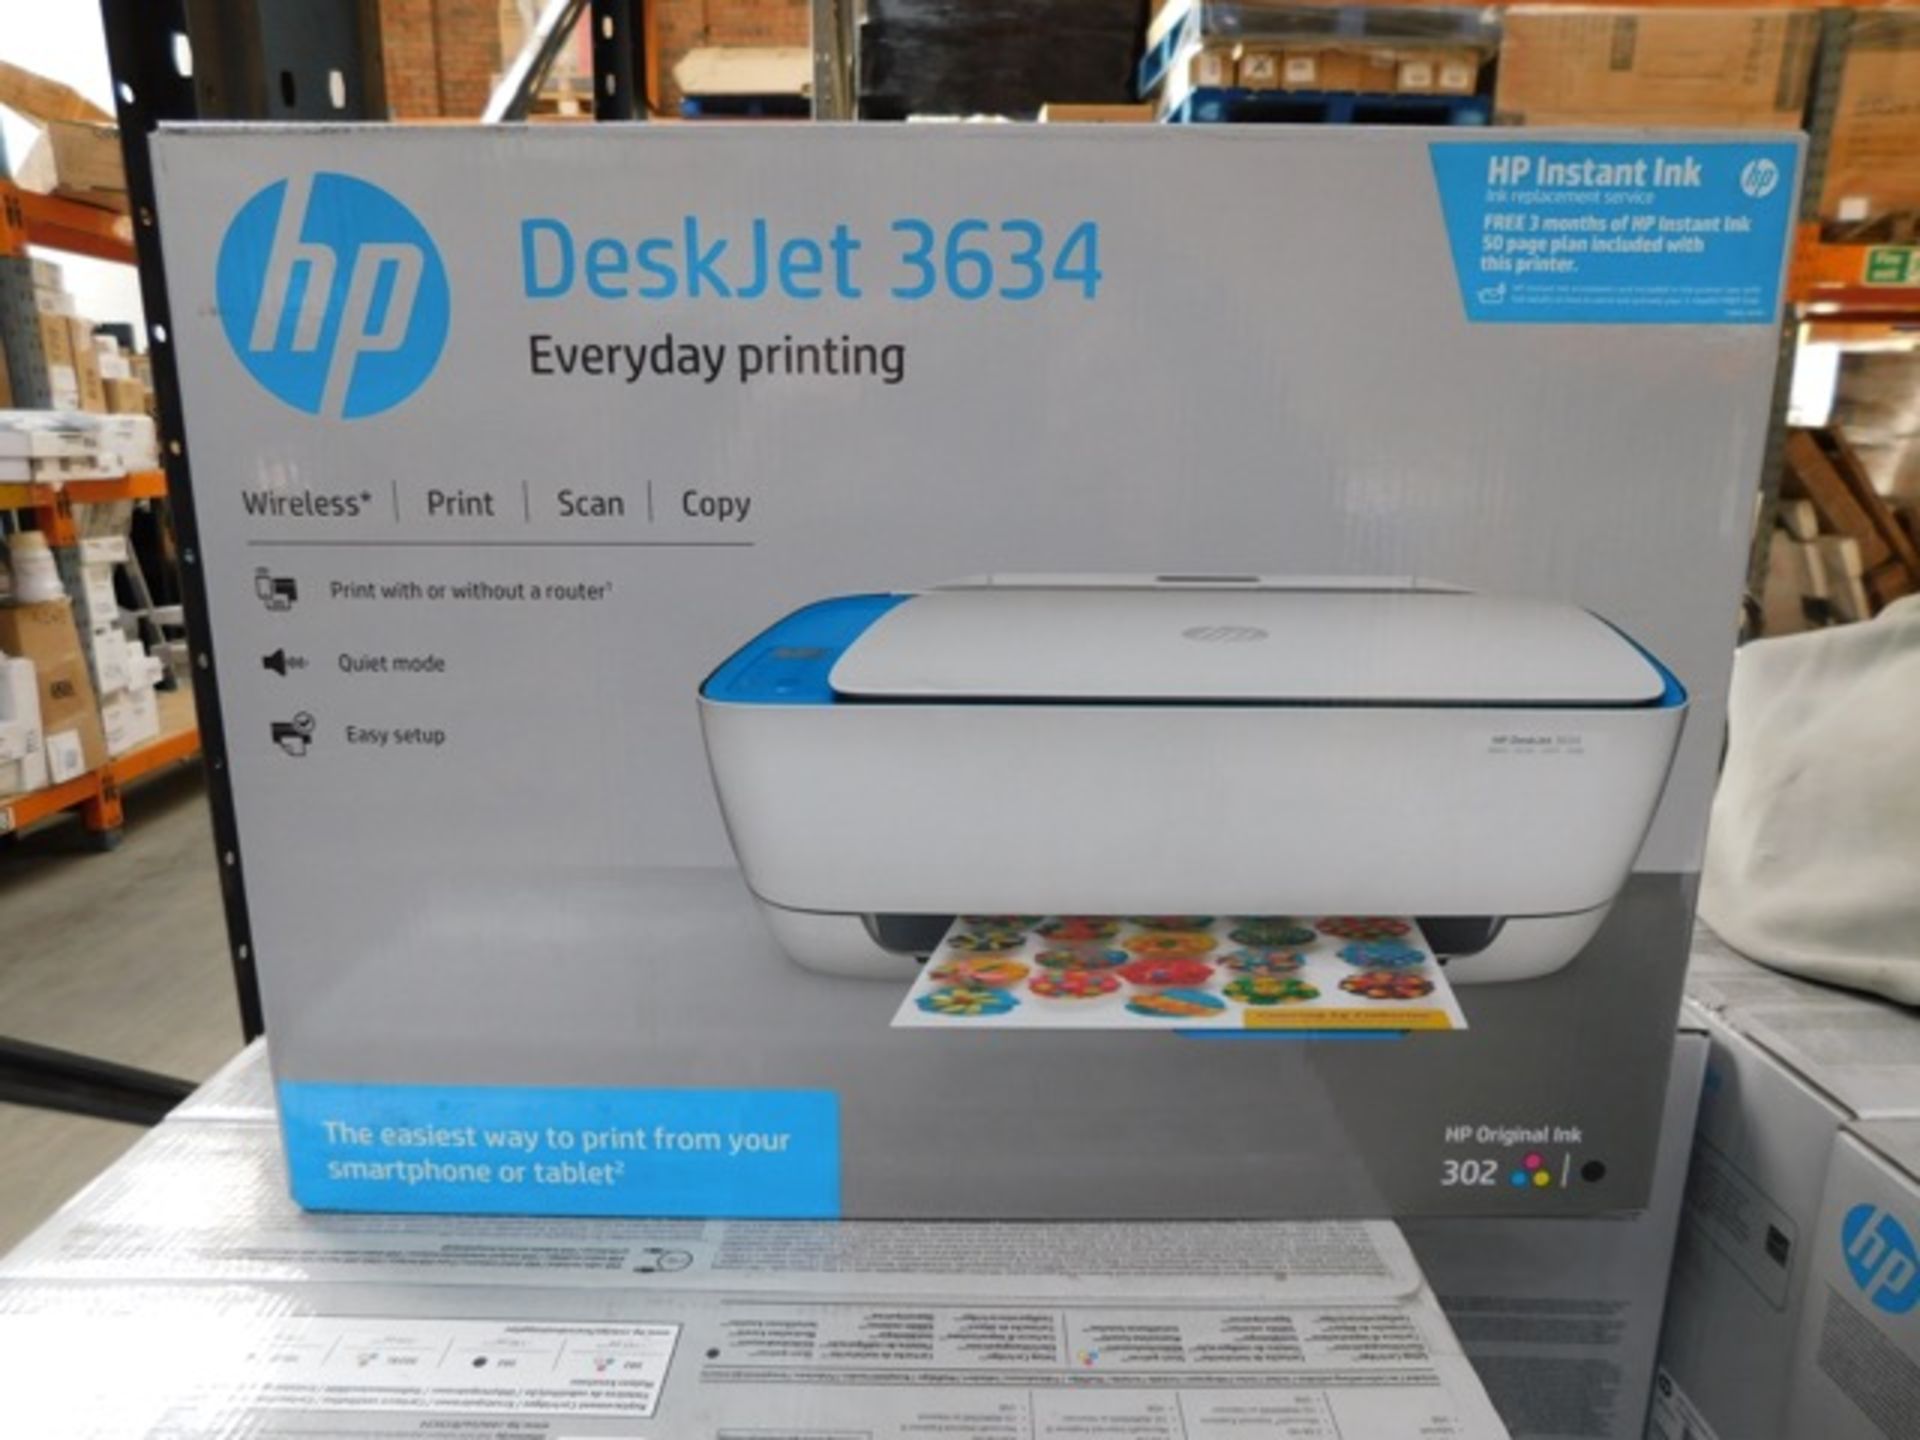 4 x Brand New HP DeskJet 3634 Printers. Wireless, Print, Scan & Copy.